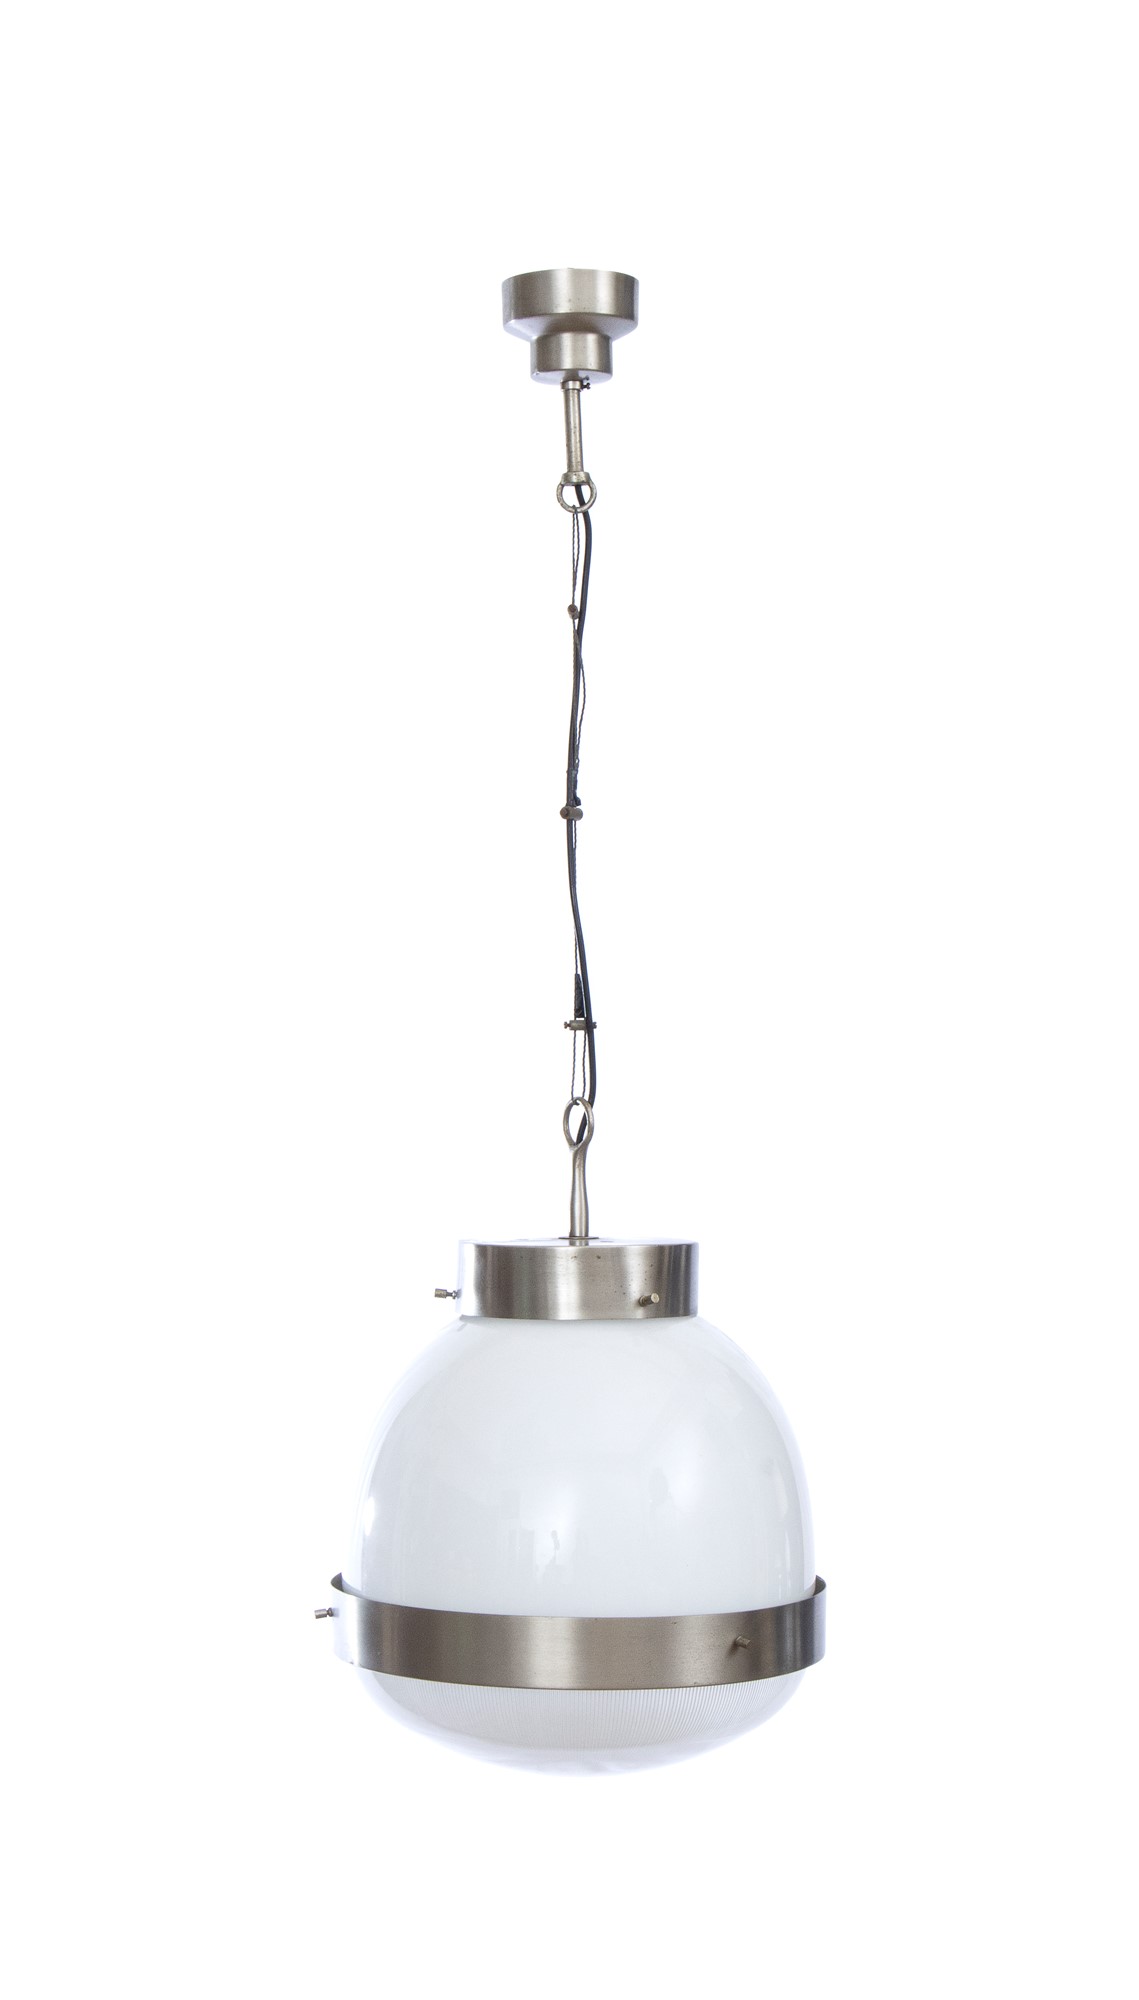 Suspension lamp mod. Delta - Image 2 of 11